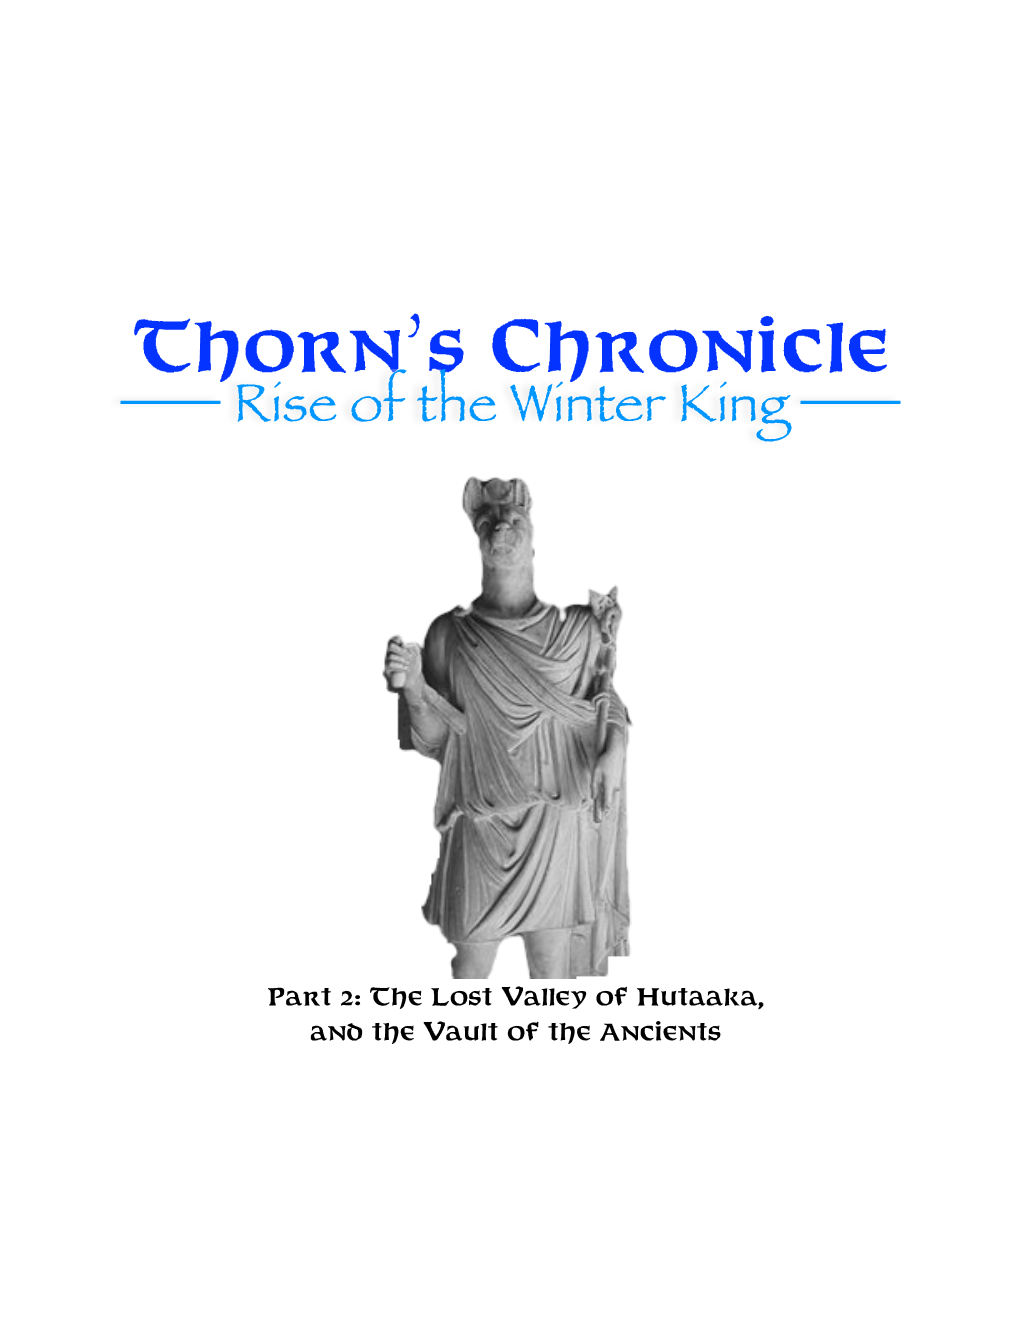 Thorn's Chronicle